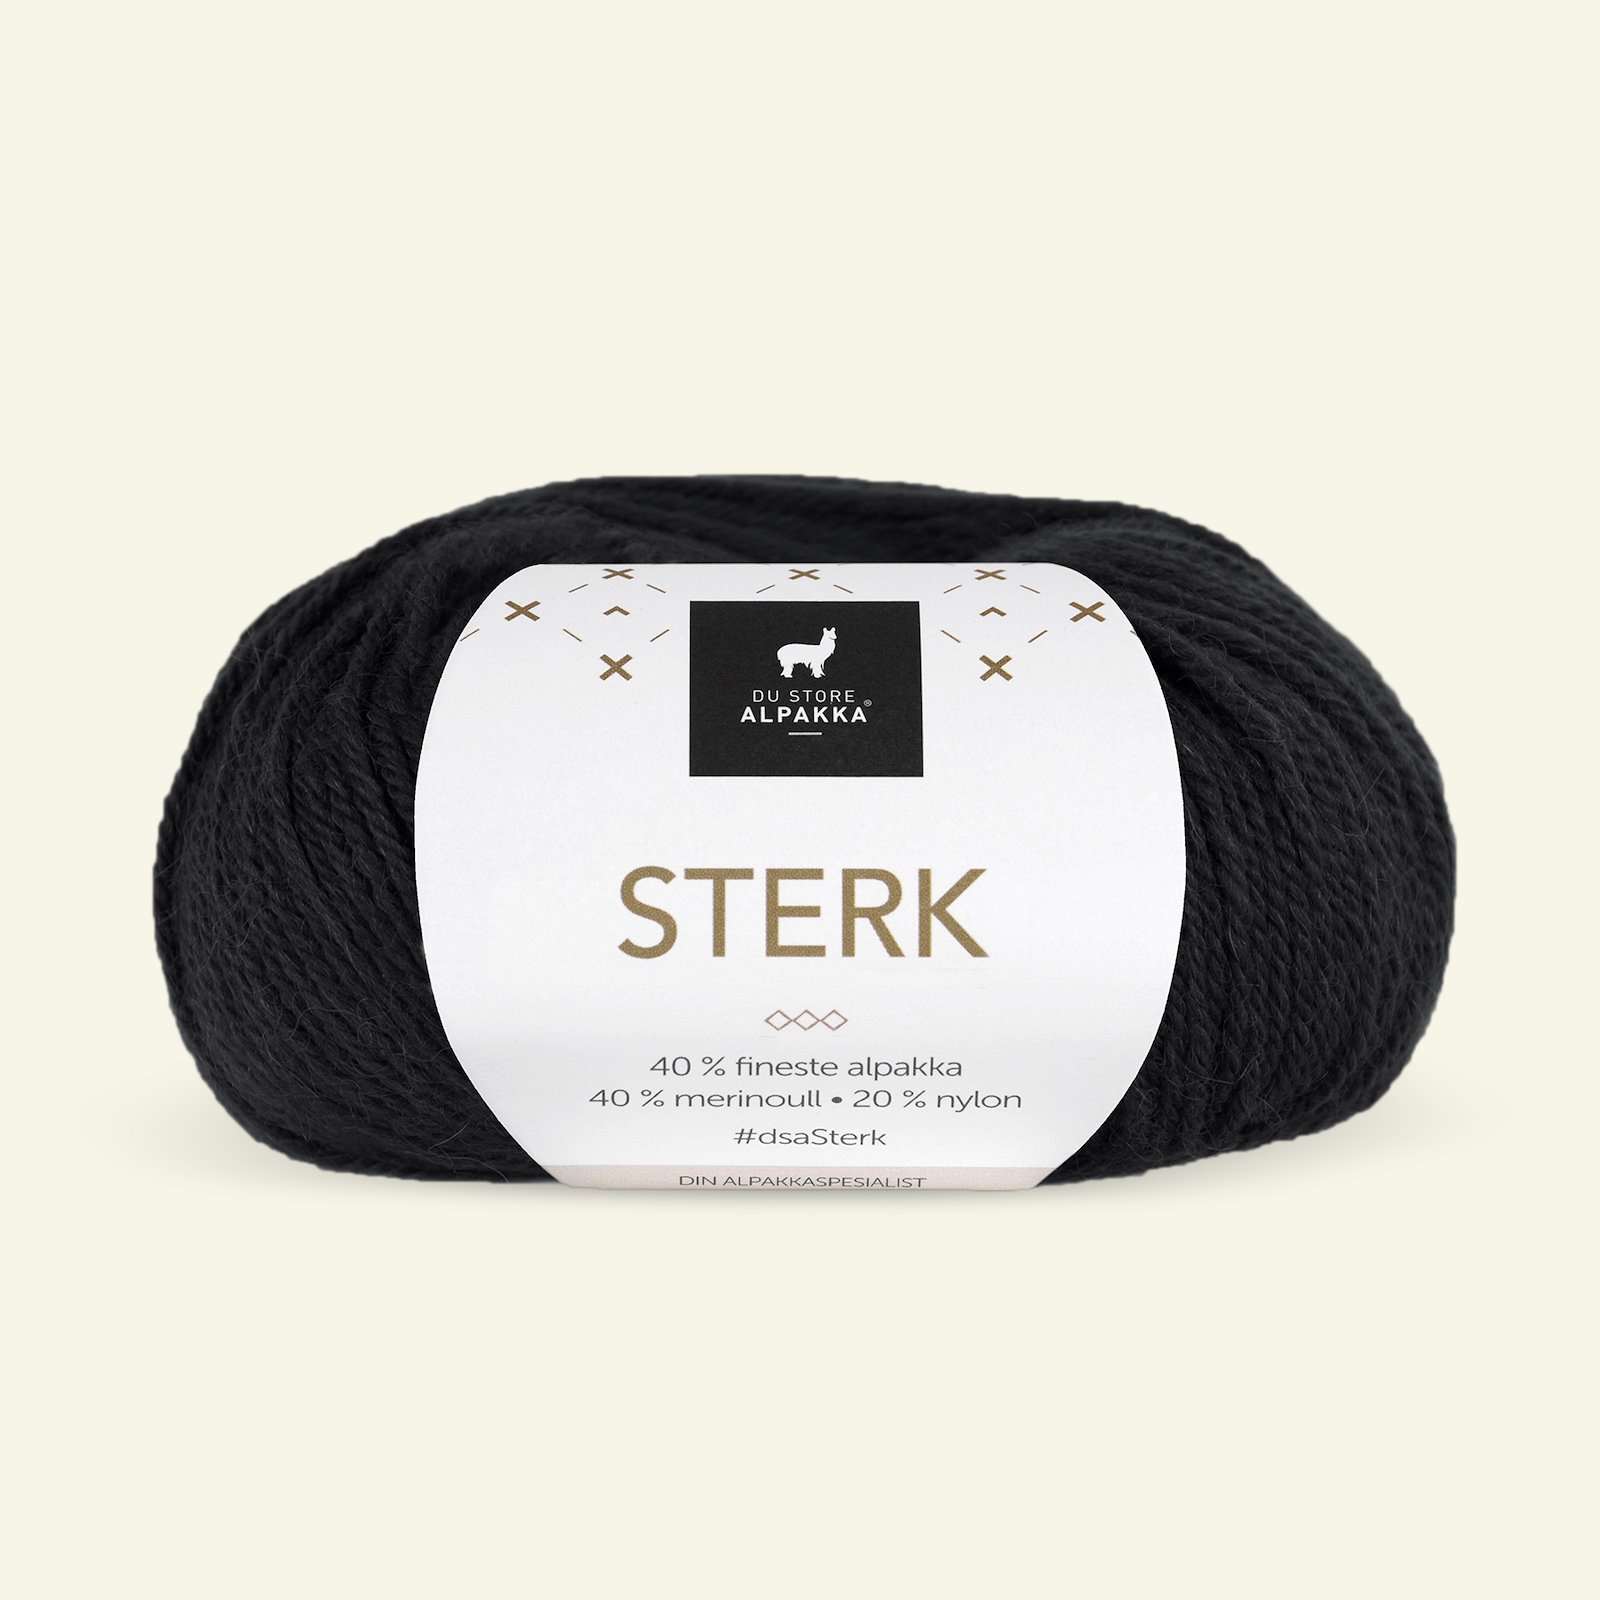 Du Store Alpakka, alpaca merino mixed yarn "Sterk", black (809) 90000658_pack